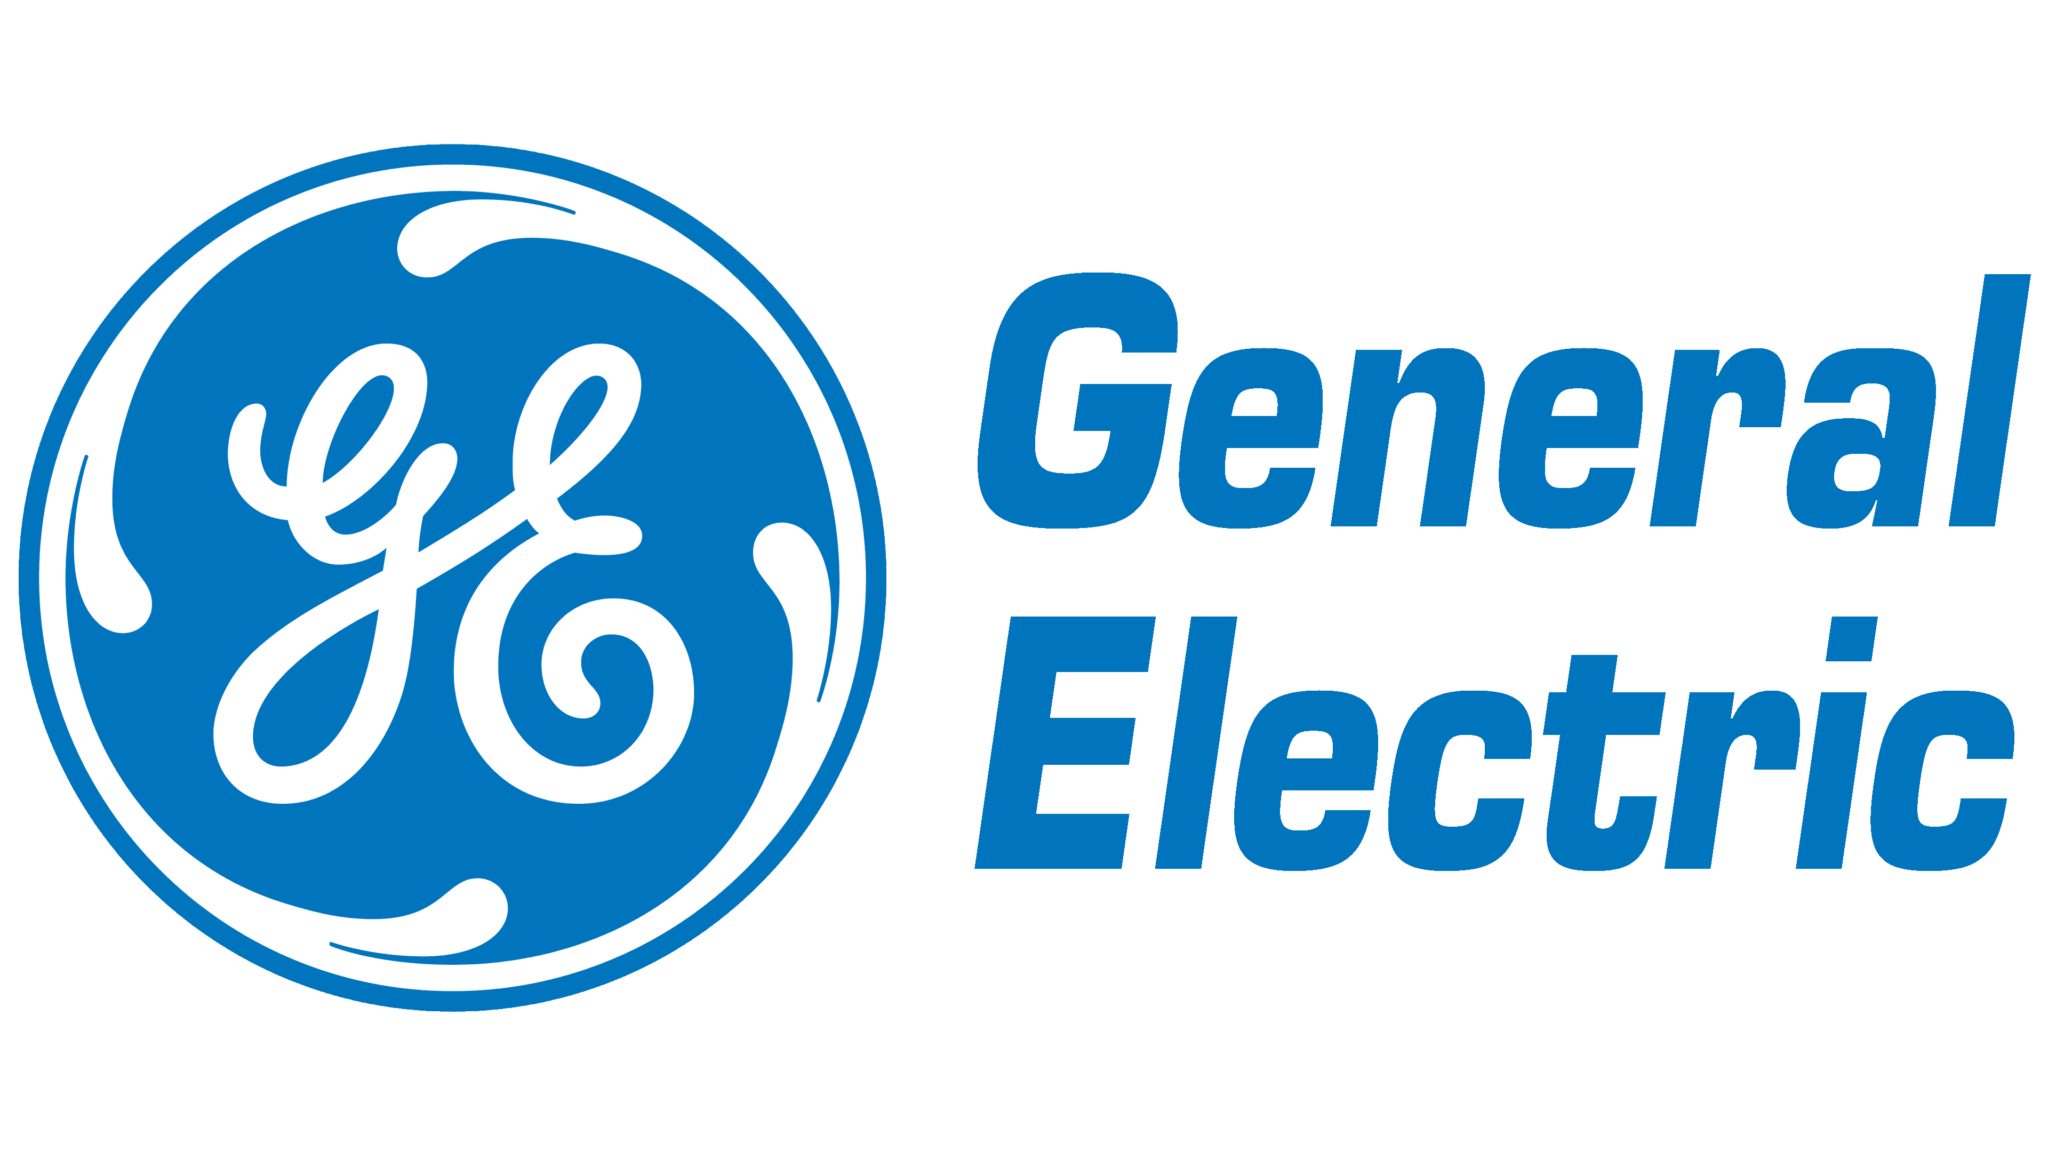 Sponsor: General Electric